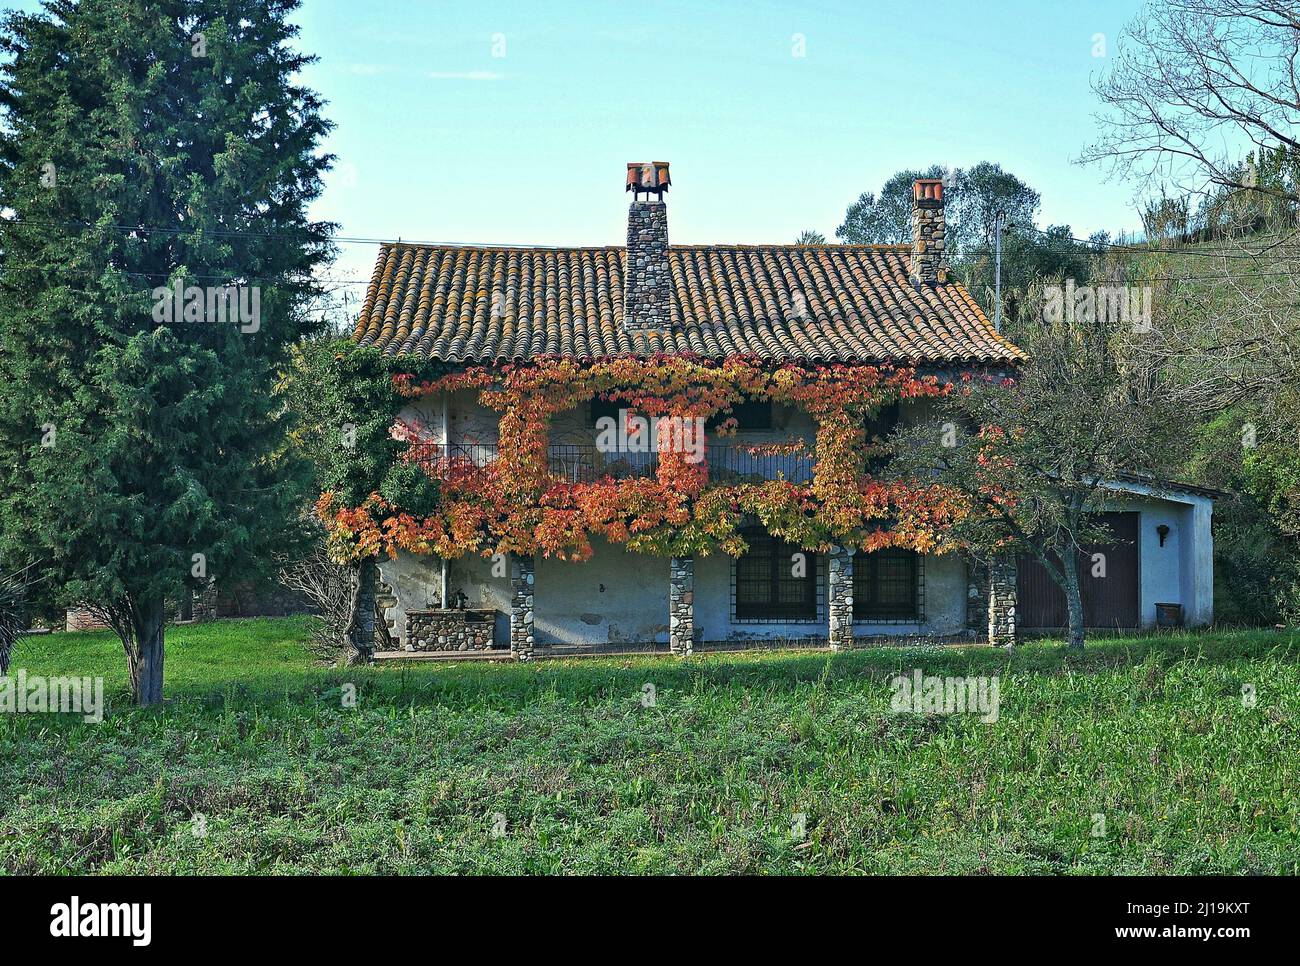 Farmhouse of Can Segard in Santa Maria de Palautordera in the region of Valles Oriental province of Barcelona,Catalonia,Spain Stock Photo